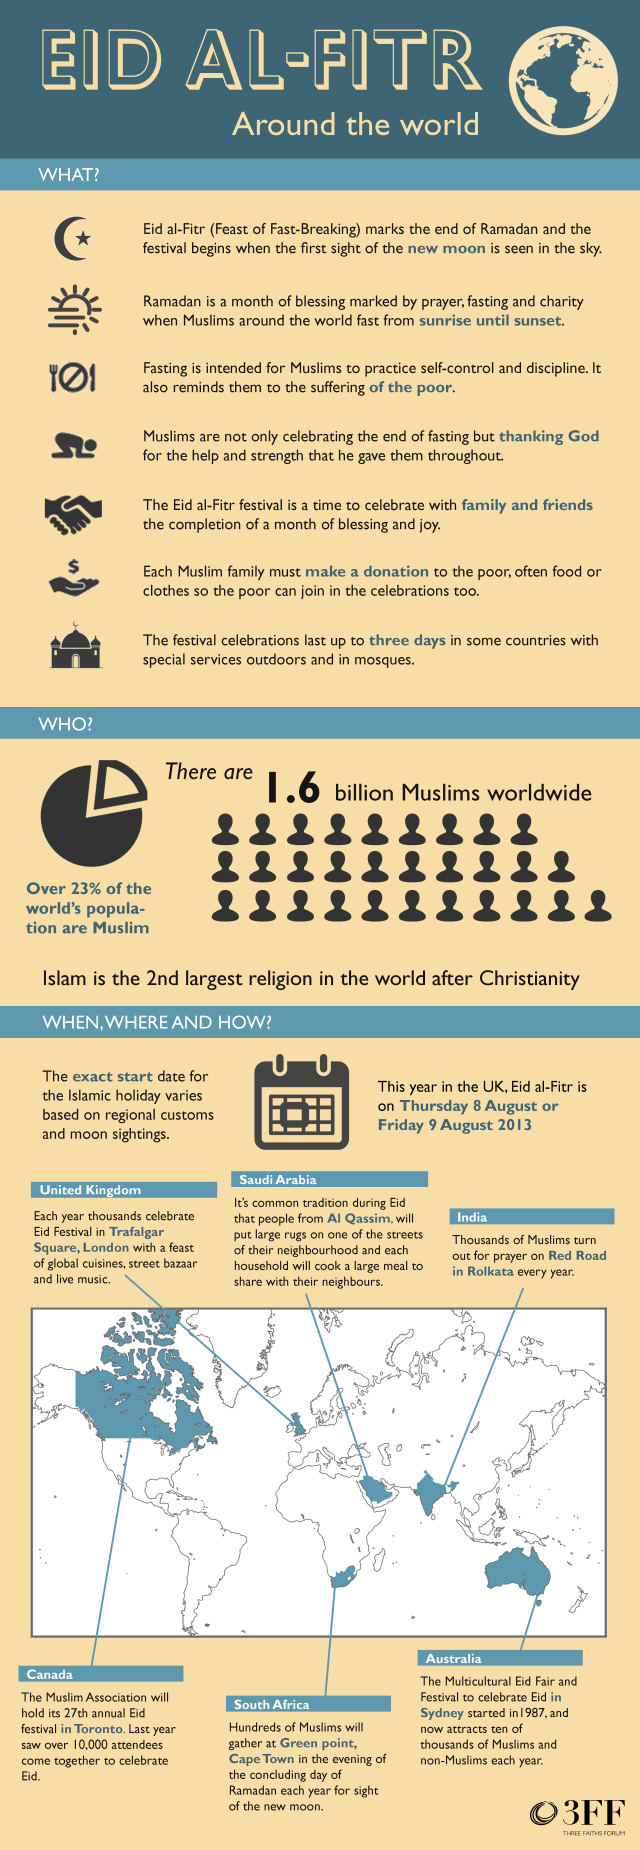 #Eid al-Fitr Around the World - #infographic